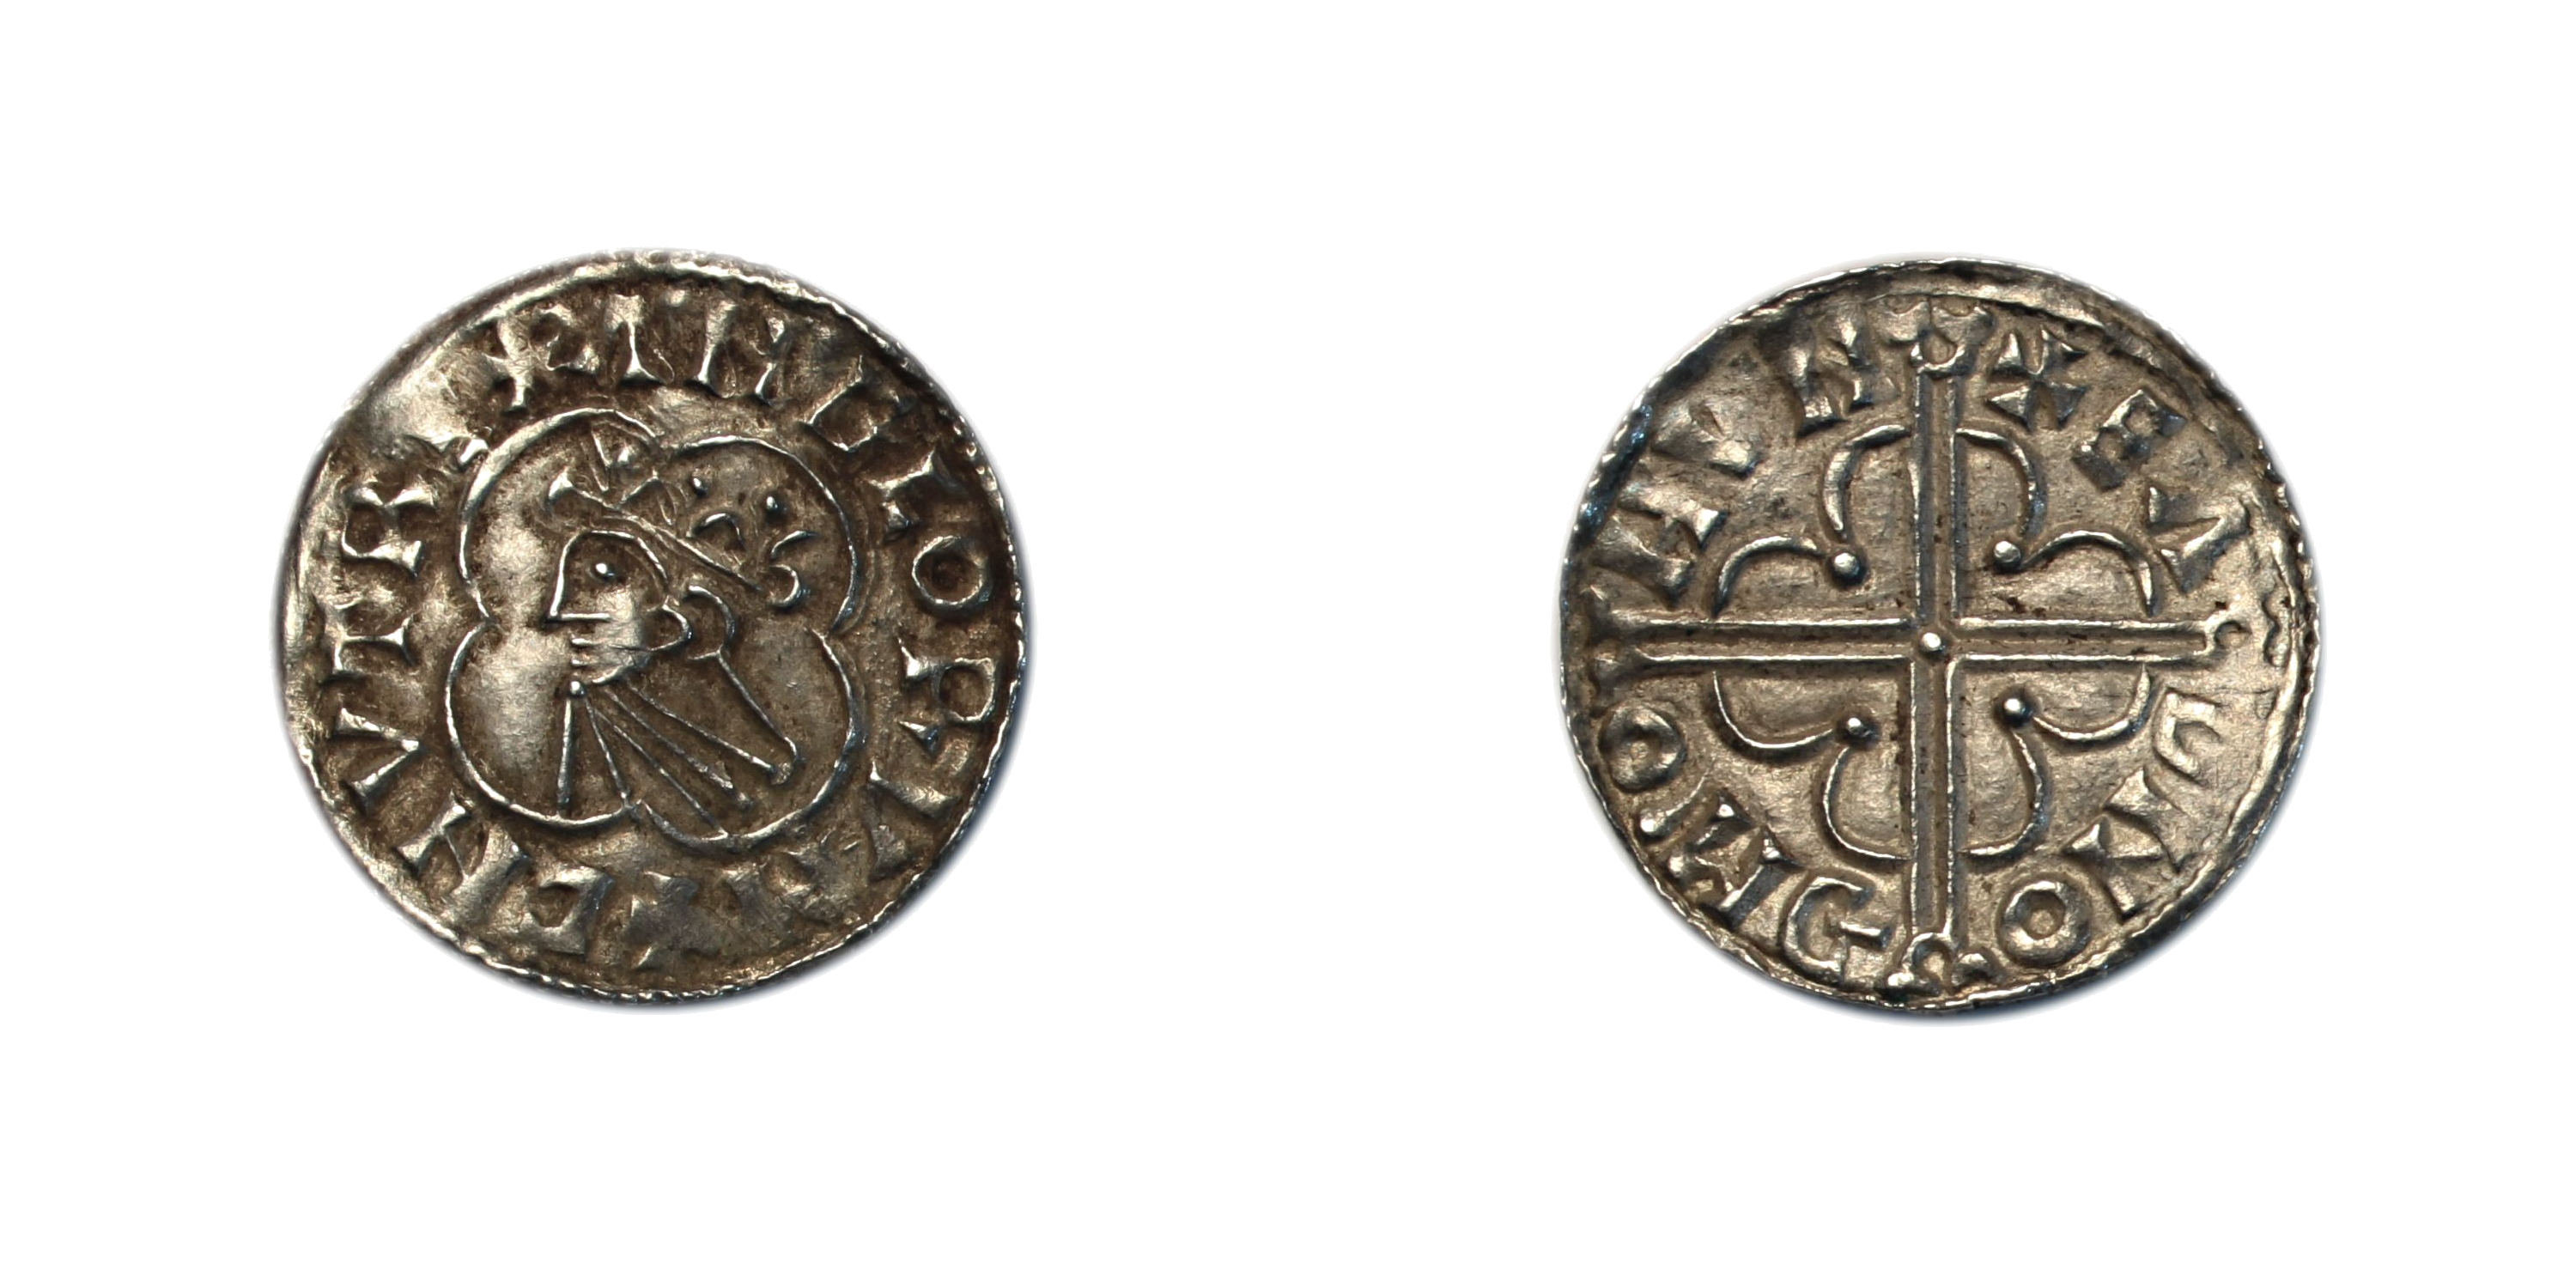 Cnut (1016-1035), Penny, quatrefoil type, Huntingdon, moneyer Eadnoth, crowned bust left, +CNVT